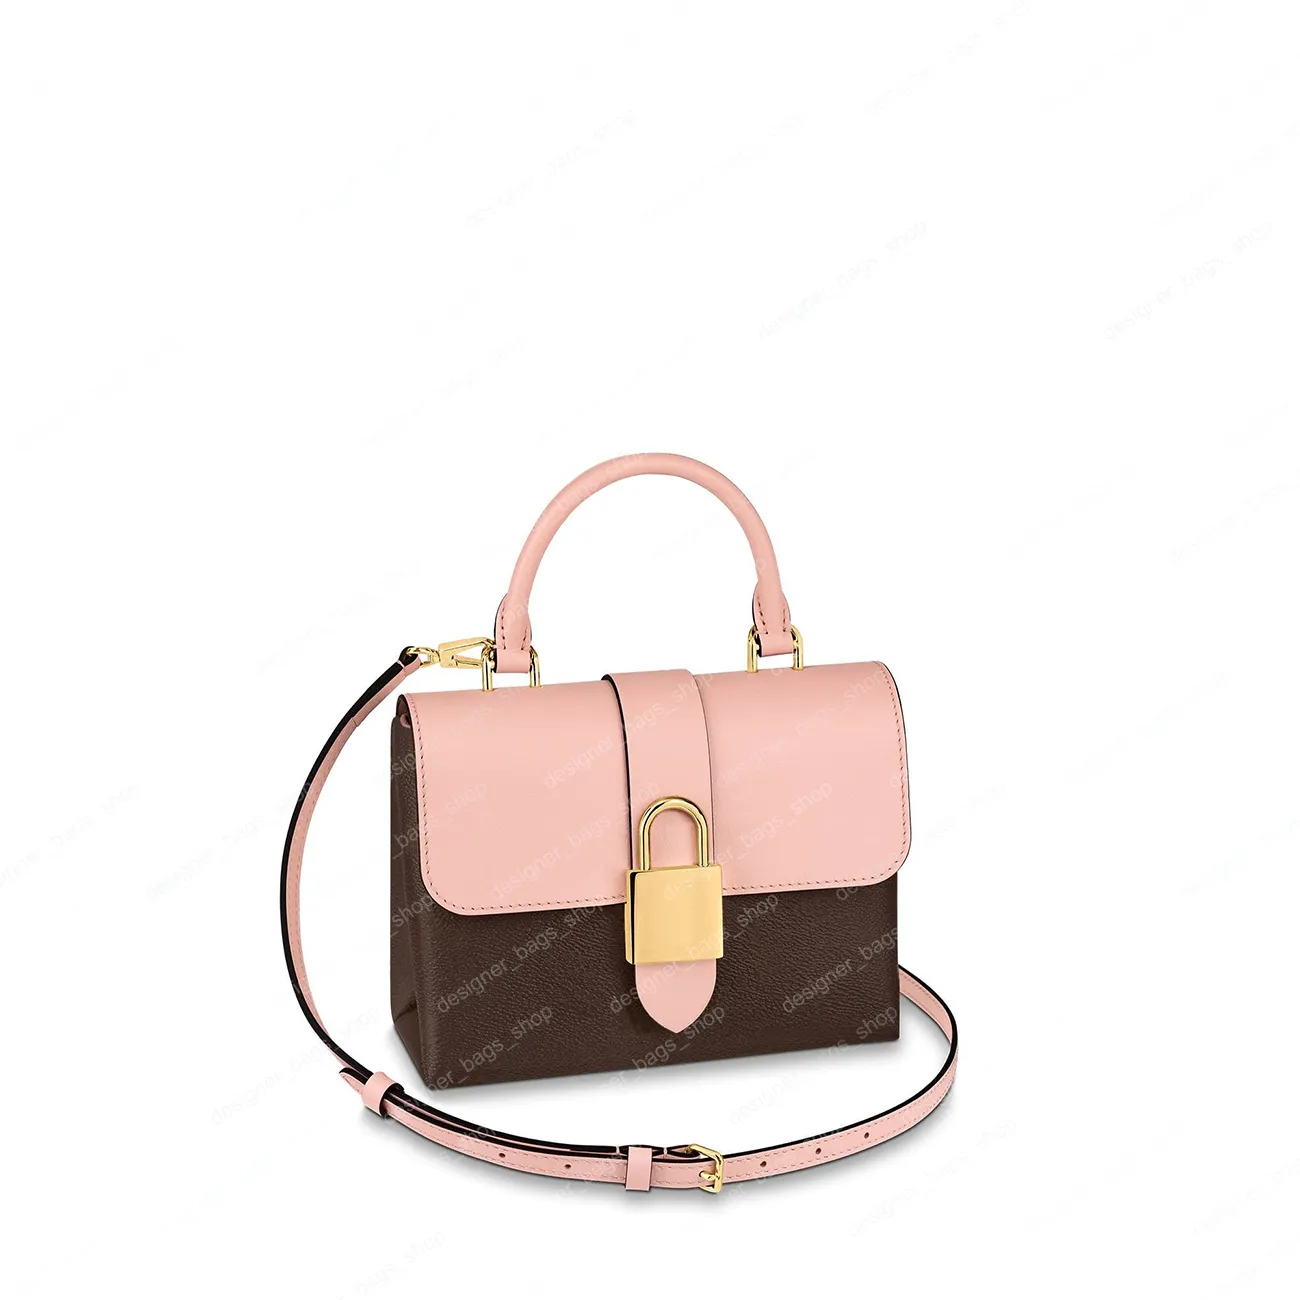 Handbag Locky BB Mini Handbags Mono Print Crossbody Bag Luxury Purse Shoulder Bags Cross Body with Adjustable Strap Totes M44080 M44141 M44322